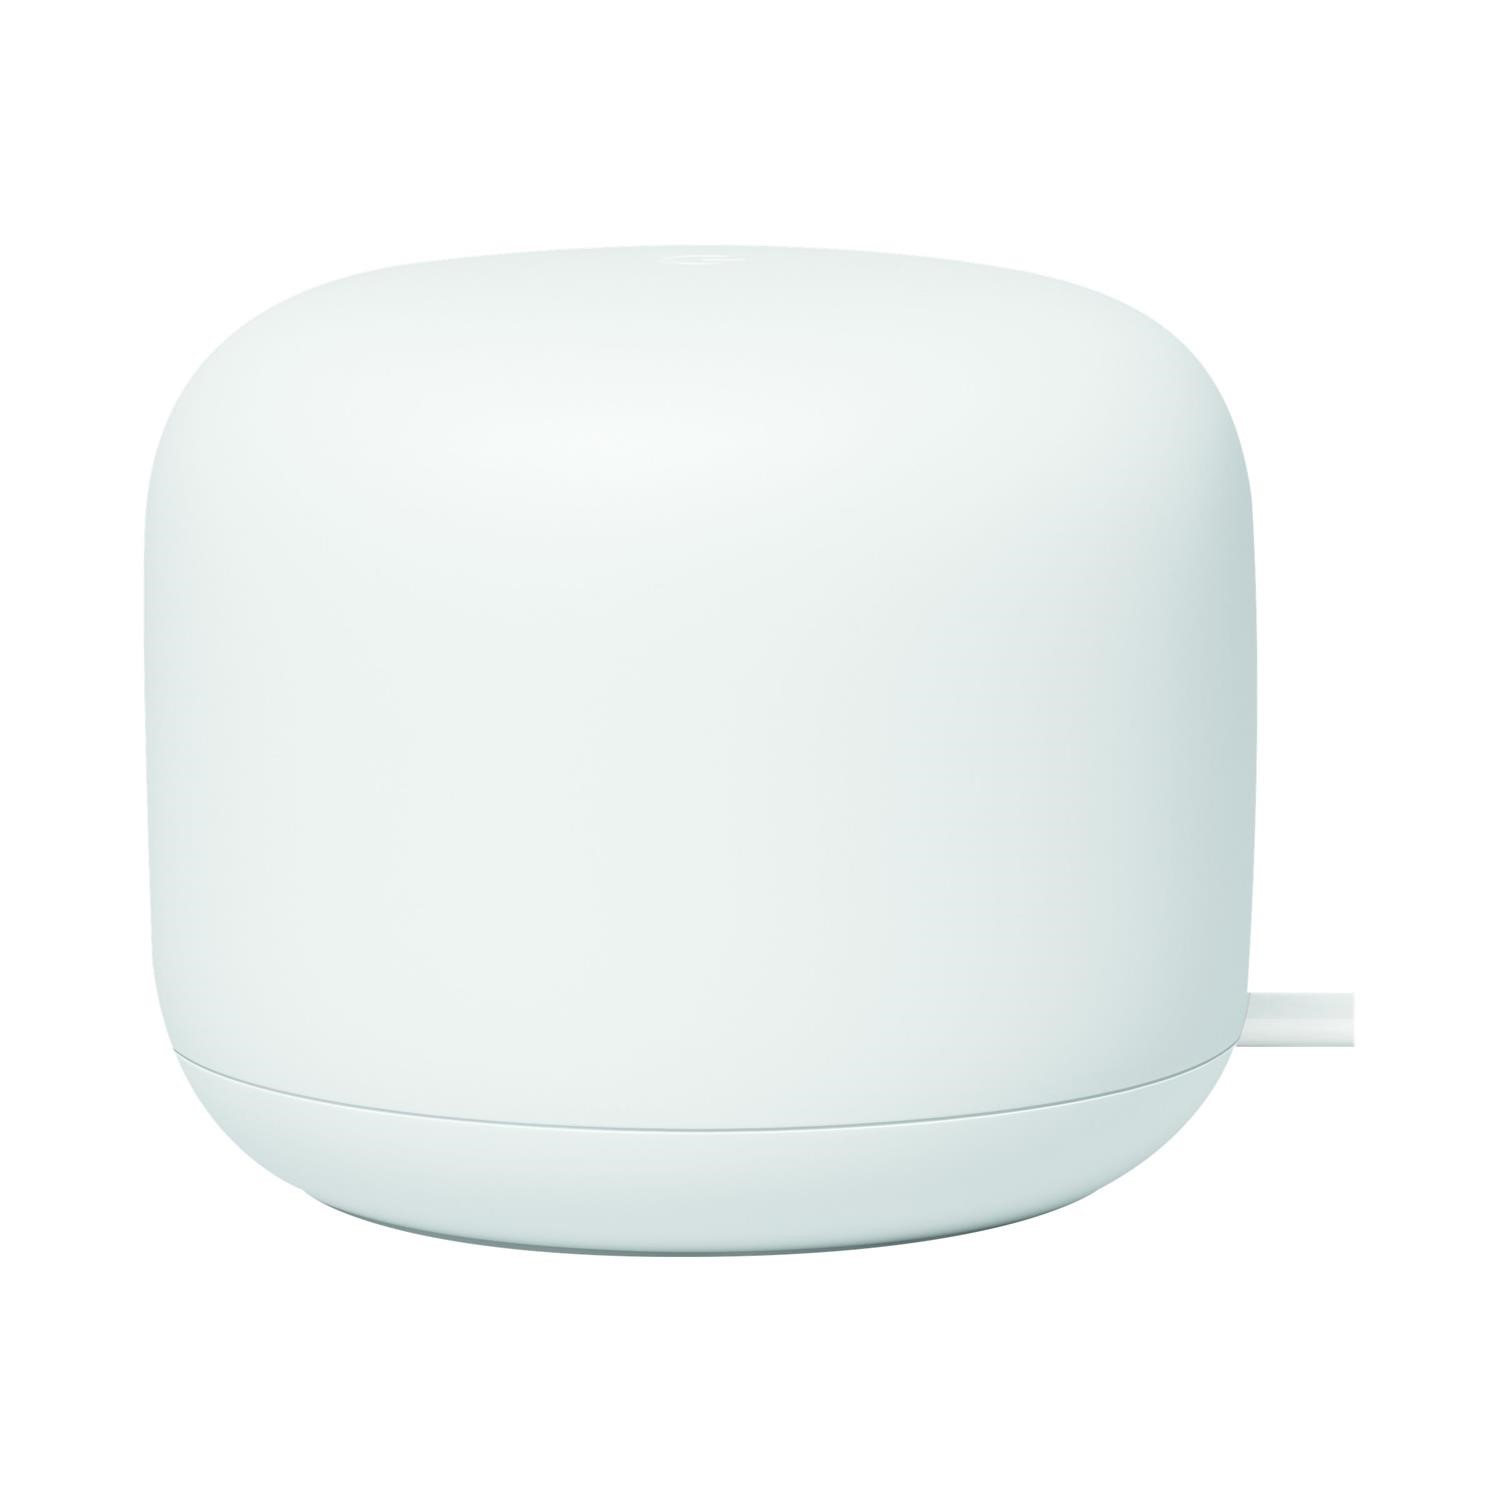 Google Nest AC2200 WiFi Router